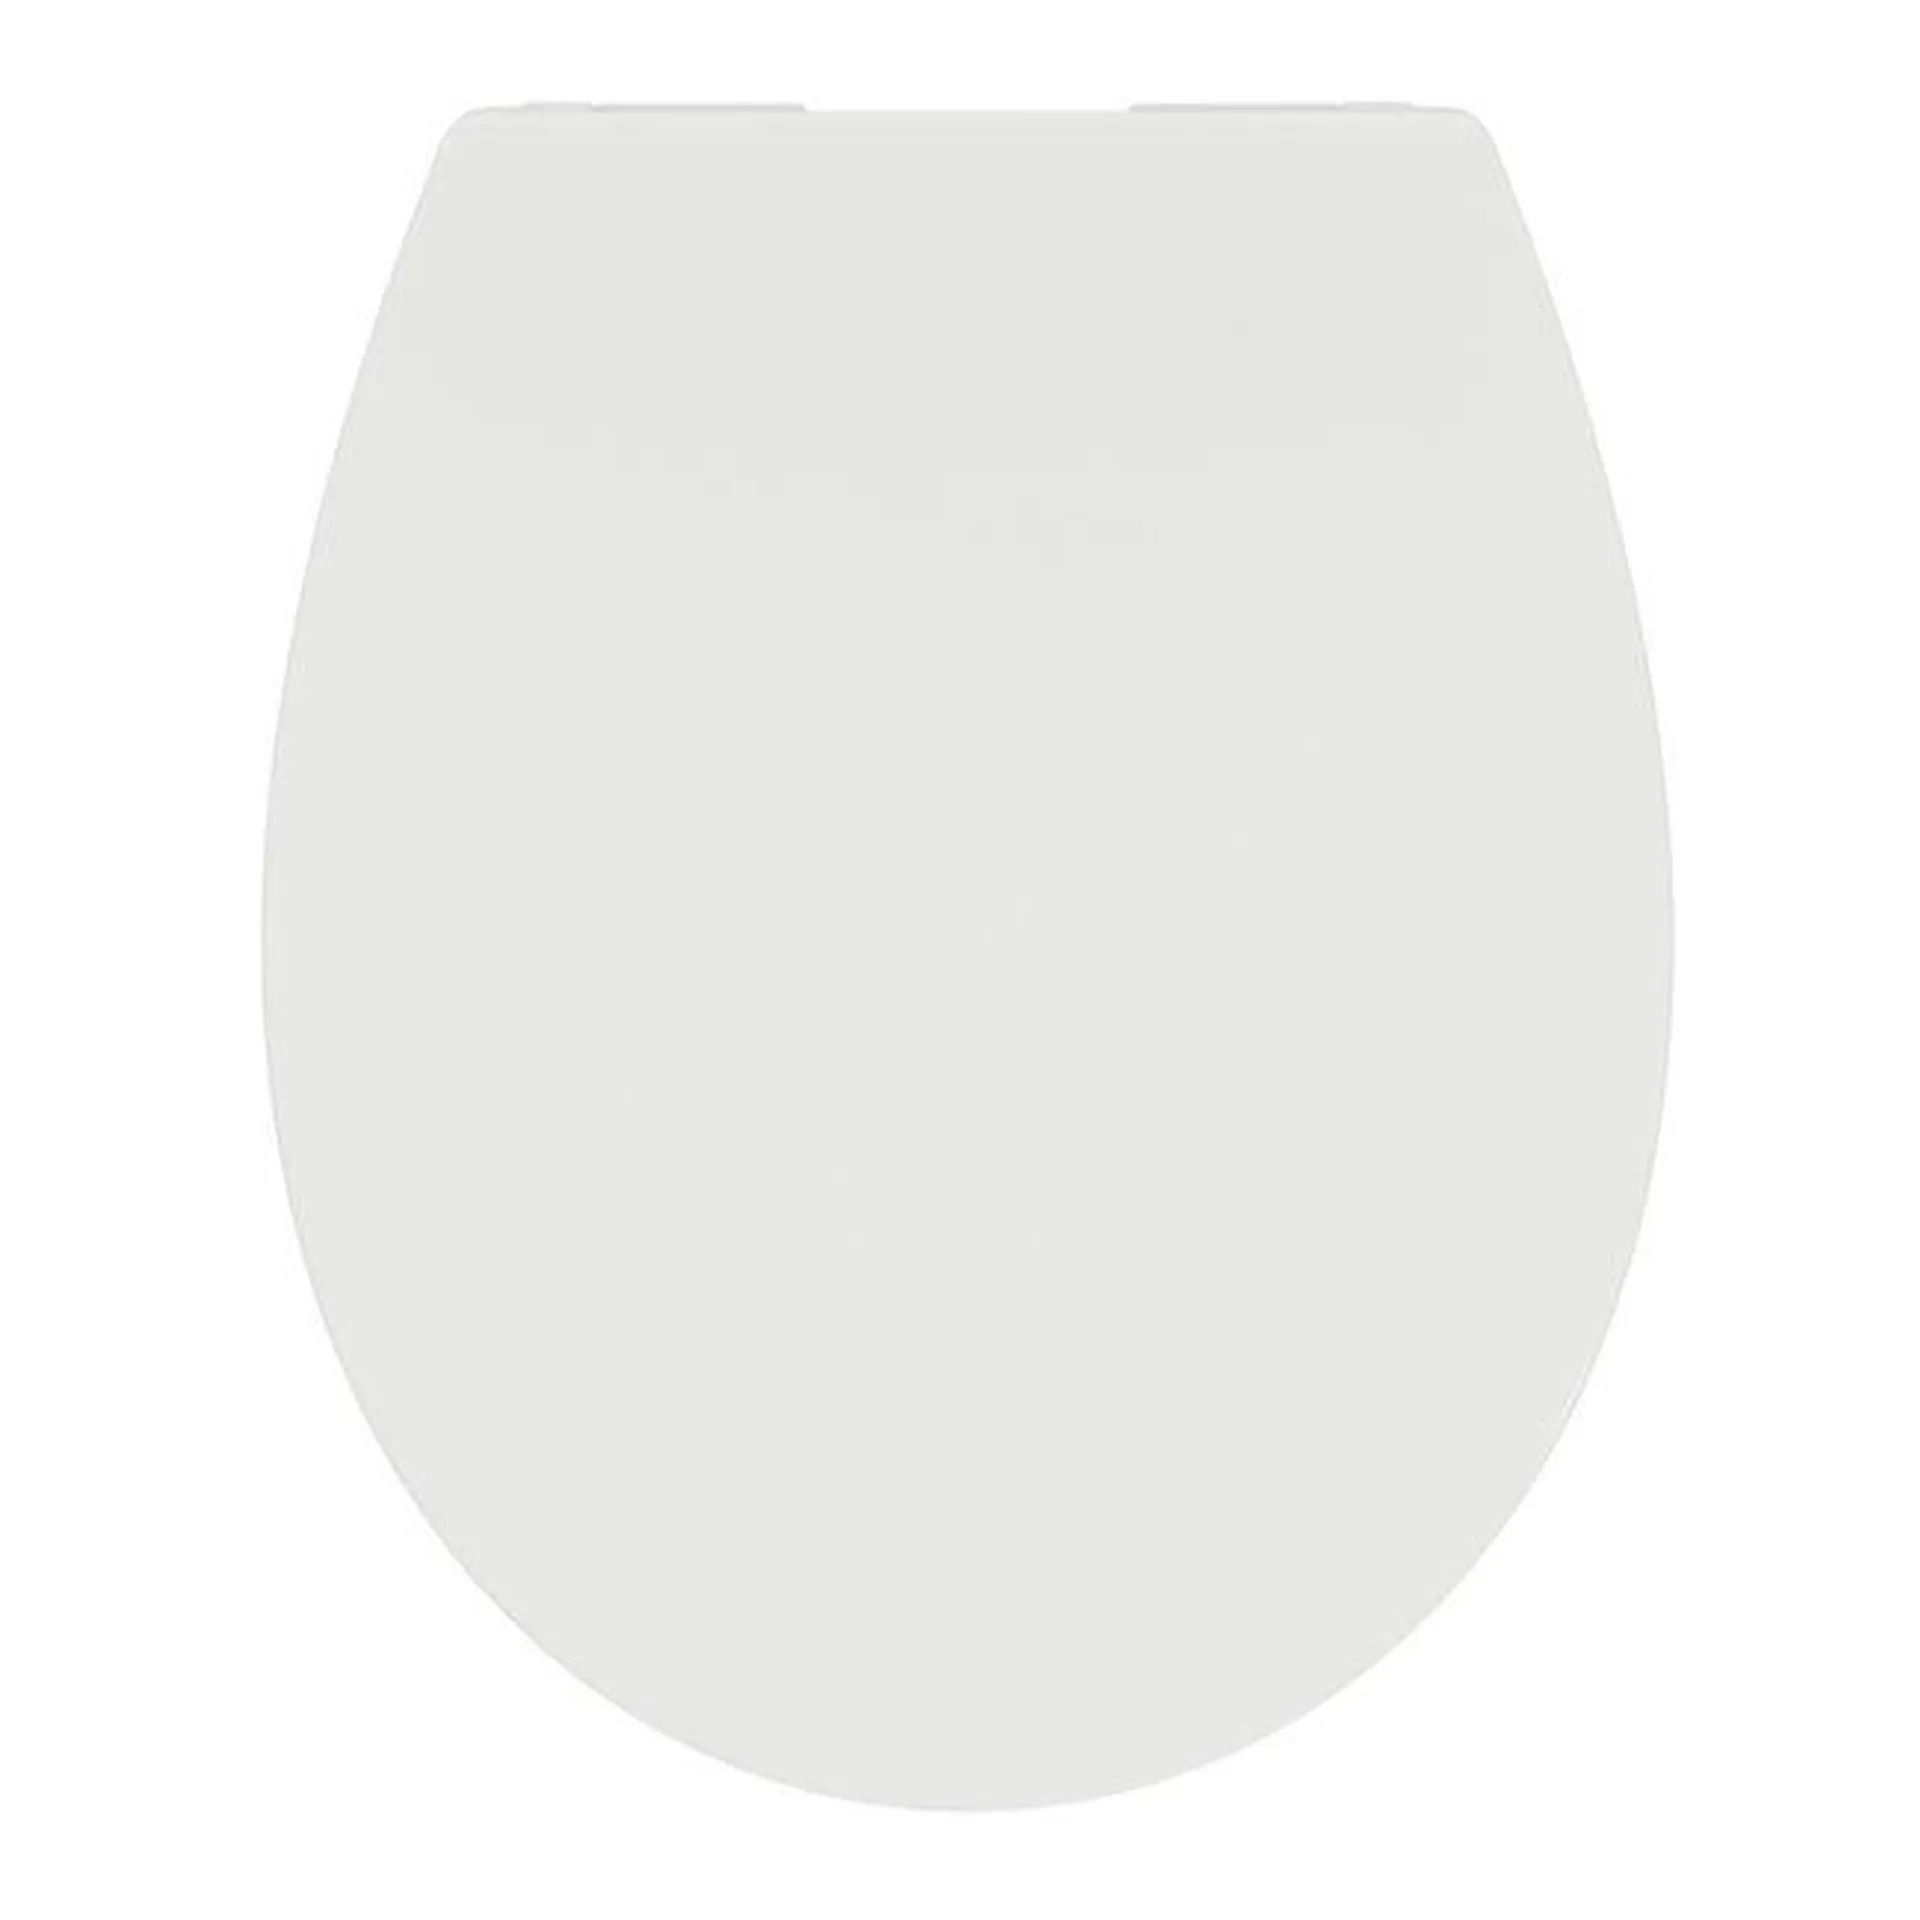 Copriwater ovale originale per serie sanitari Tirso IDEAL STANDARD poliestere bianco eur